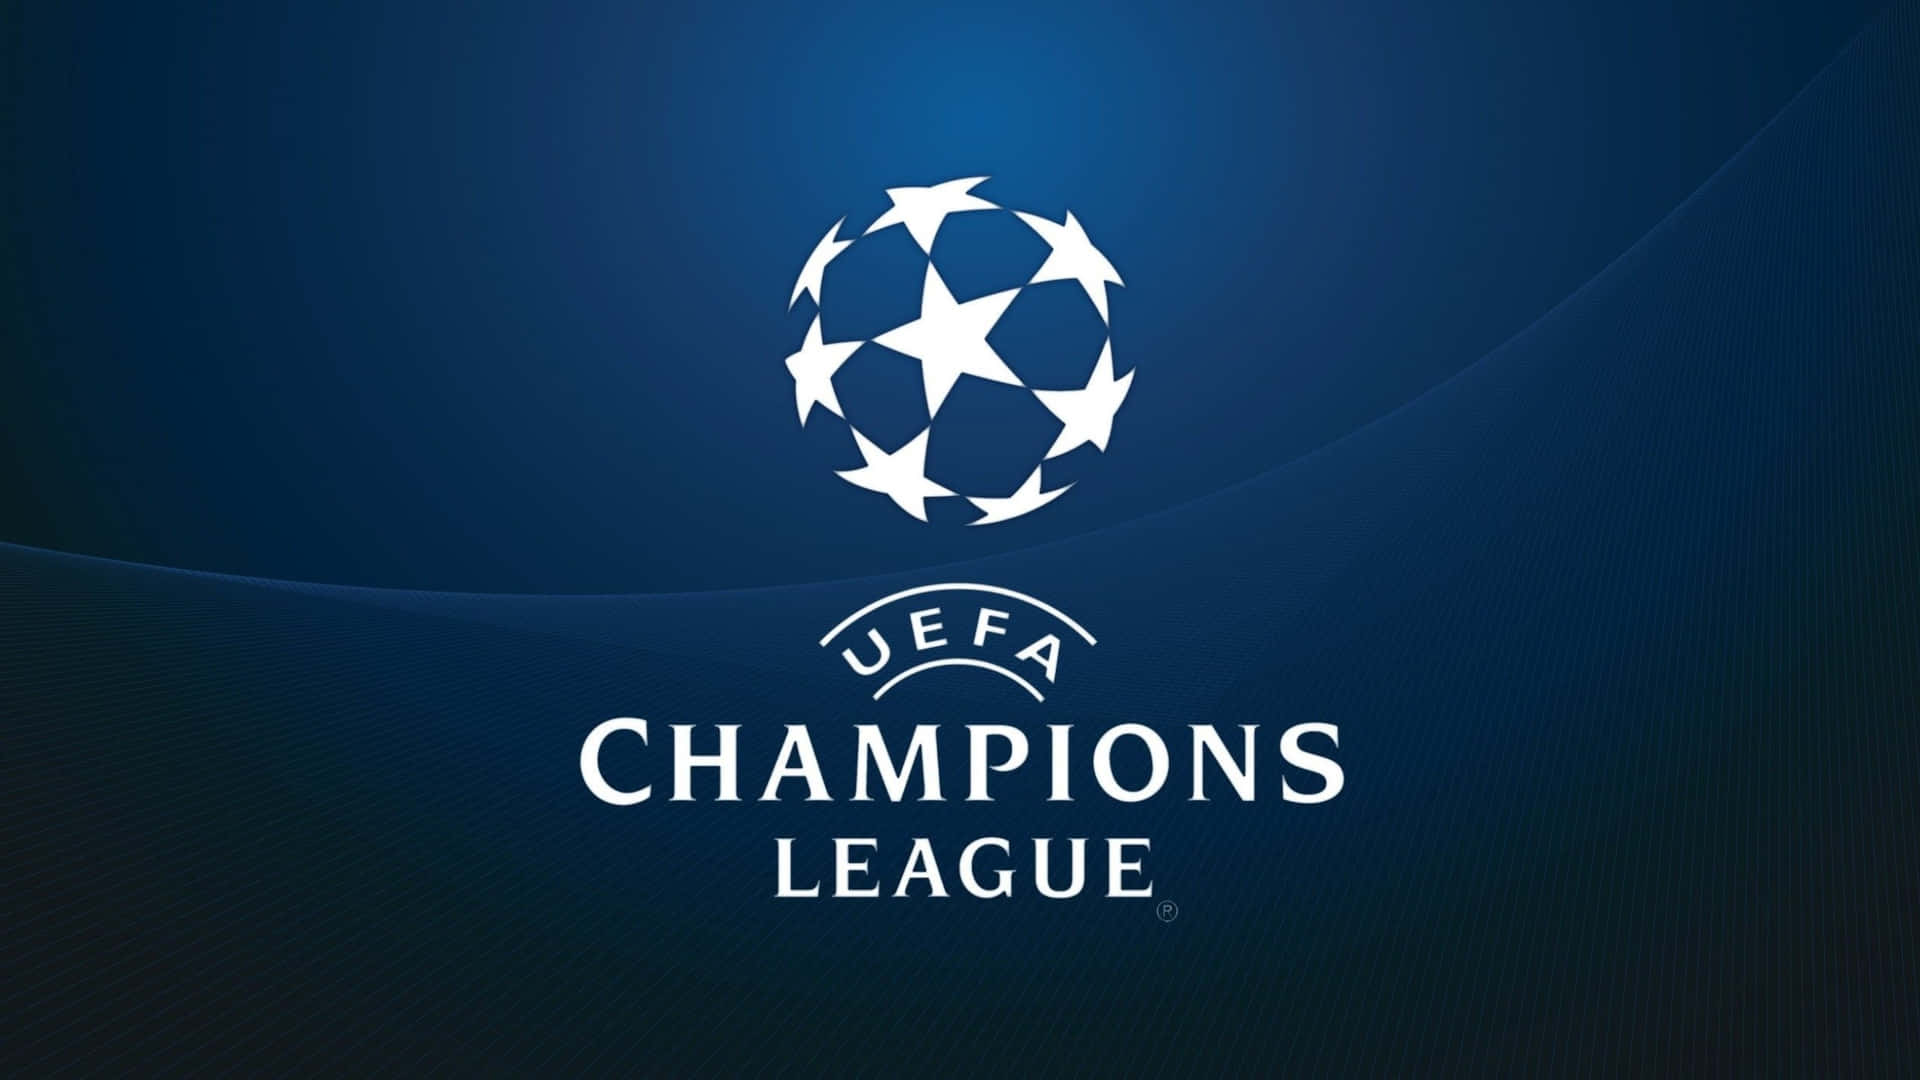 Champions League Background Wallpaper